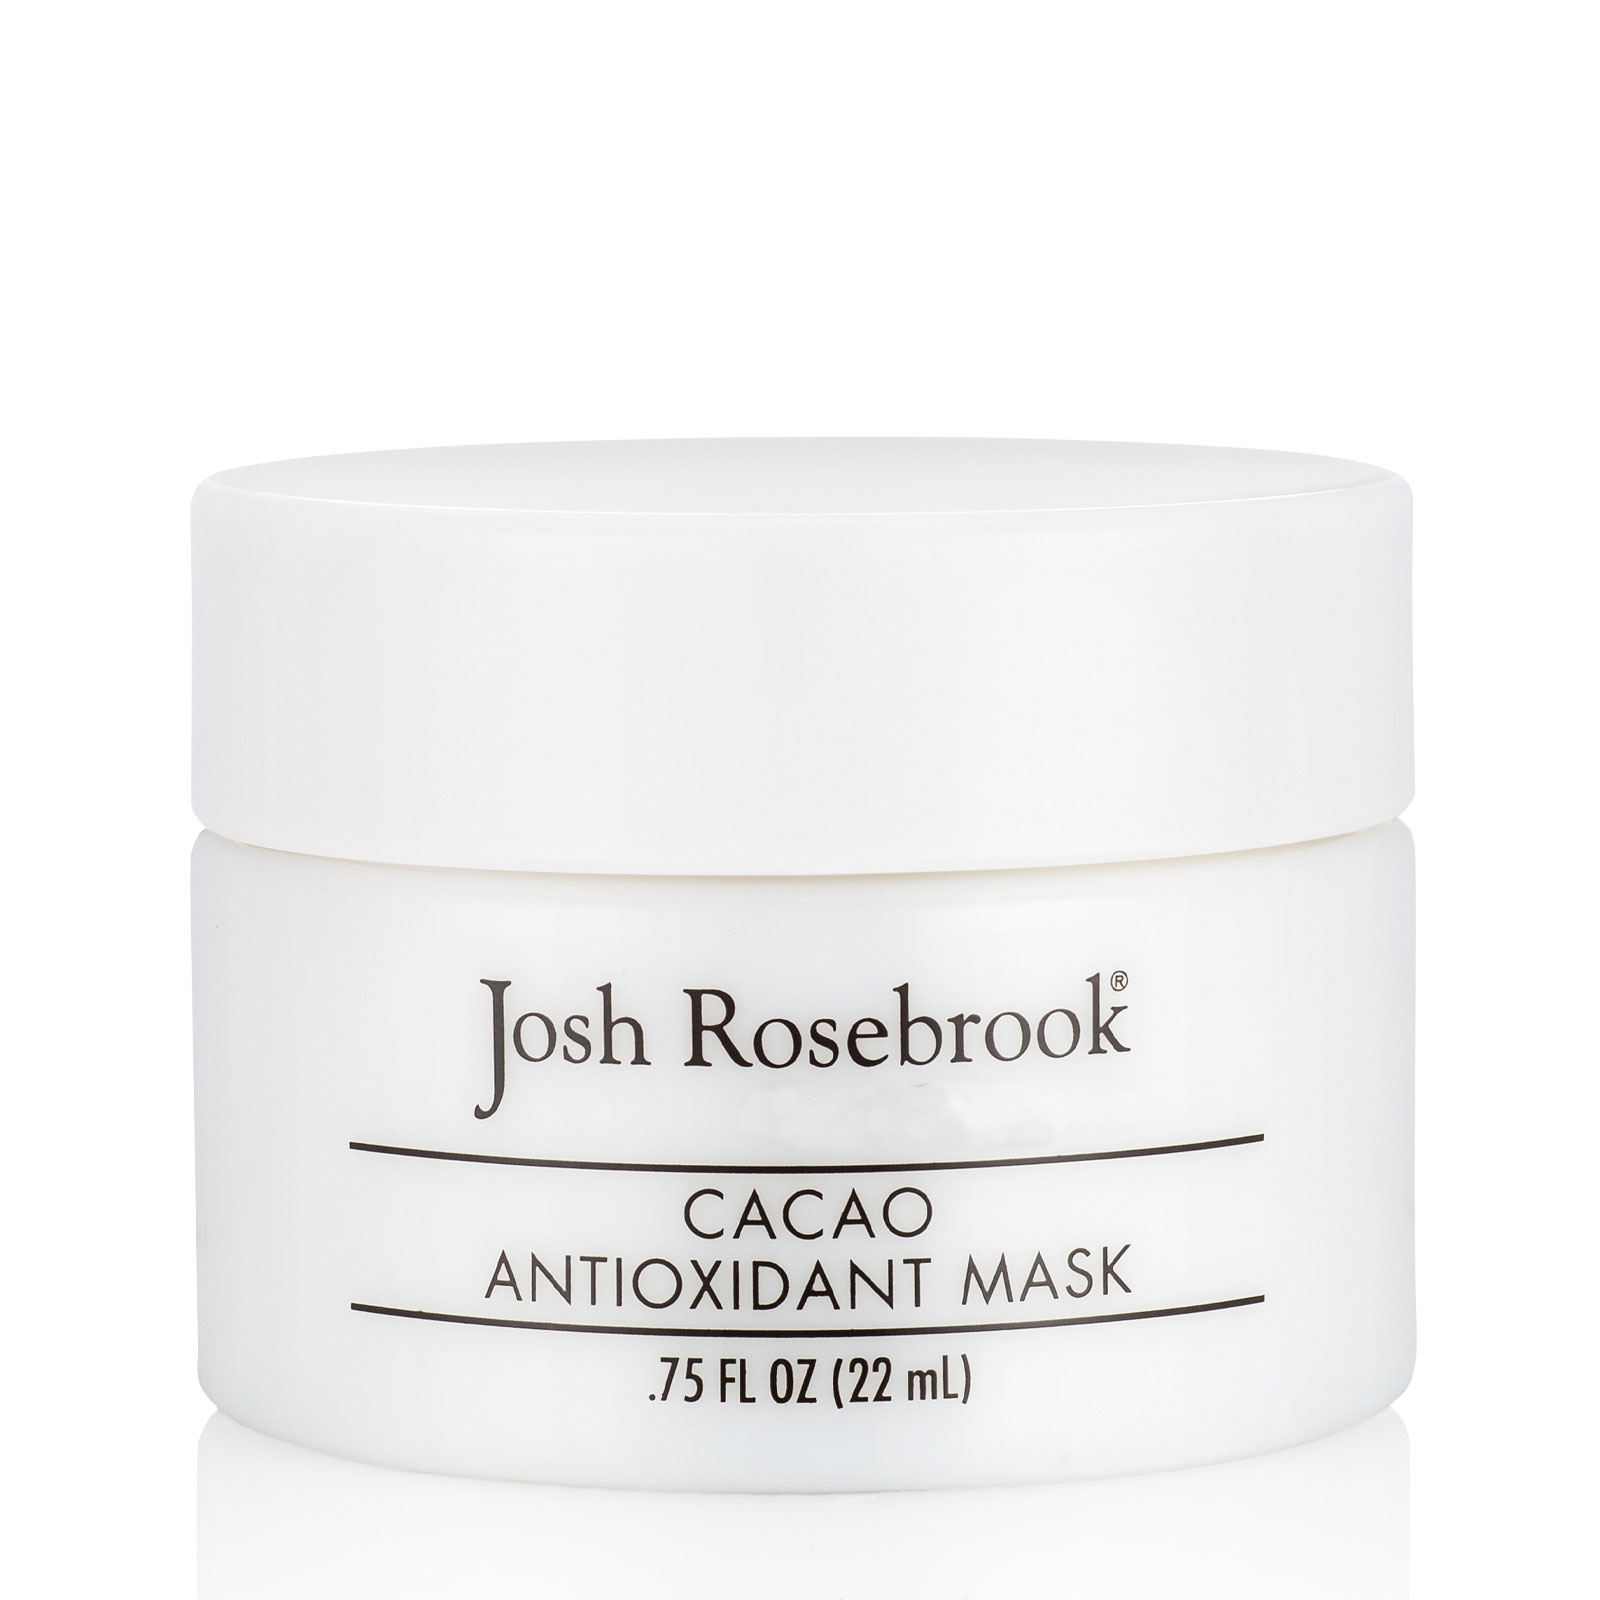 Josh Rosebrook Cacao Antioxidant Mask 22Ml